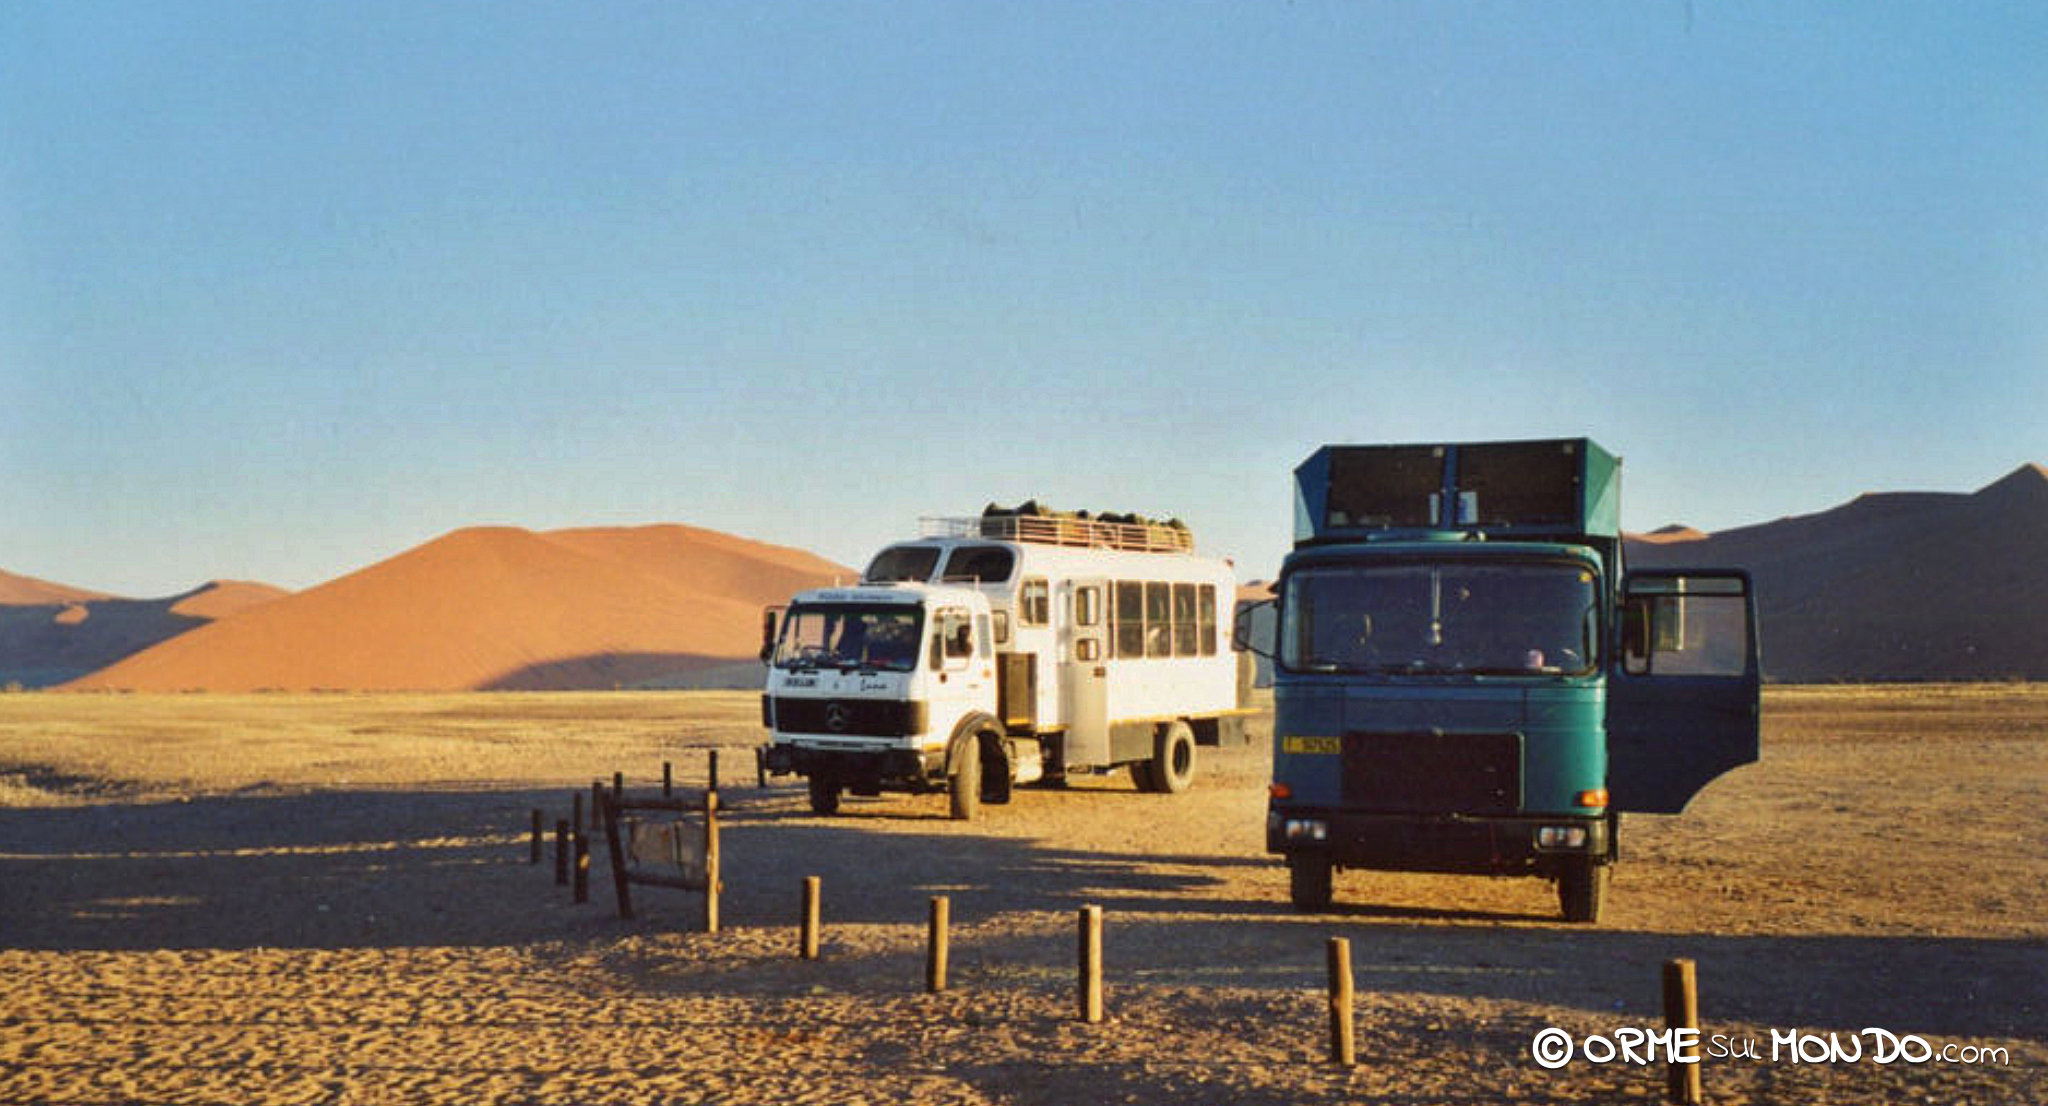 Camion 4x4 accompagnano i turisti alle dune